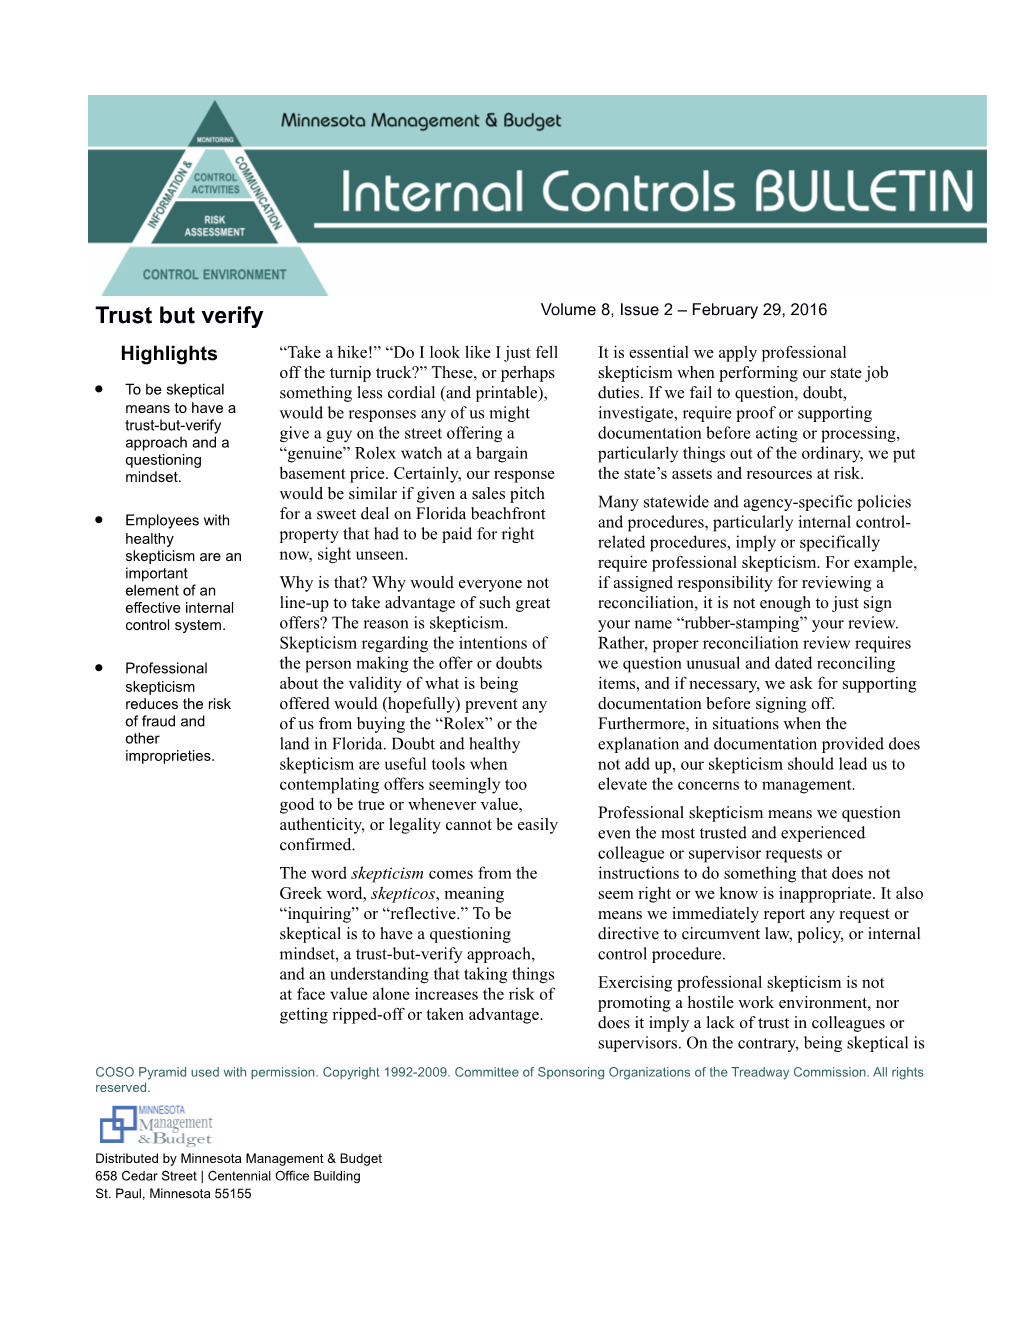 February 2016 Internal Controls Bulletin - Trust but Verify